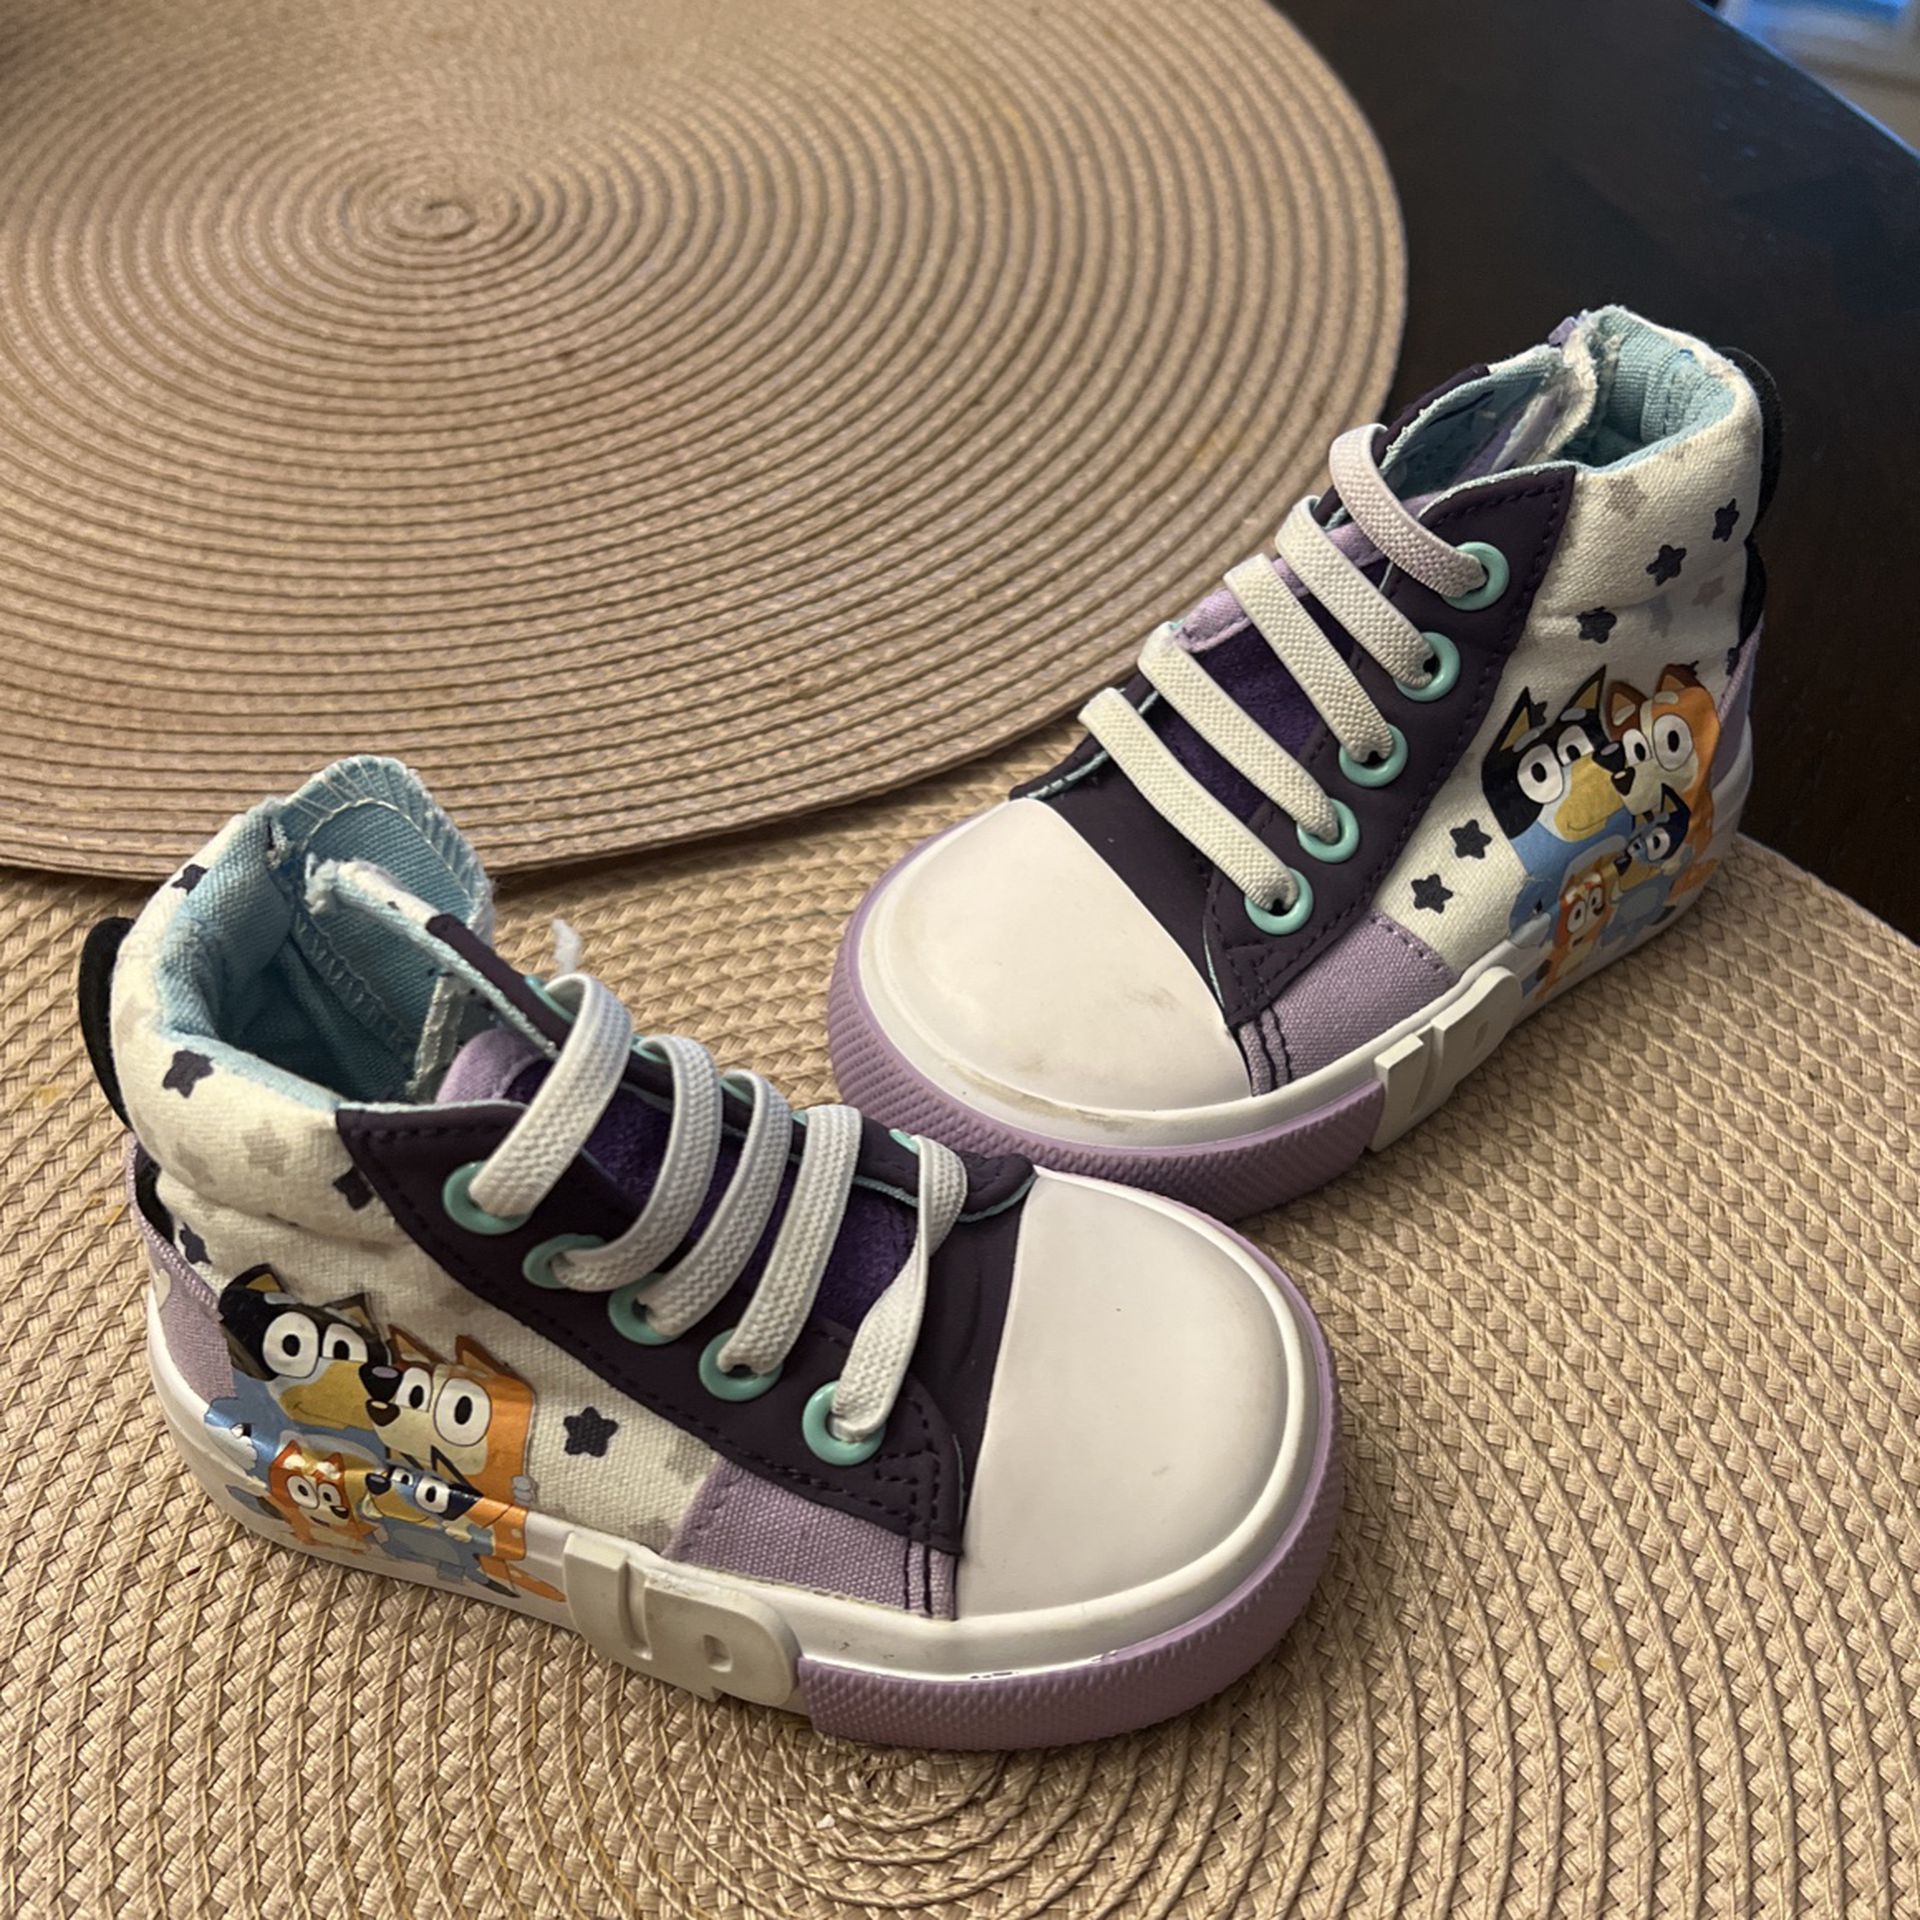 Bluey Toddler Shoes